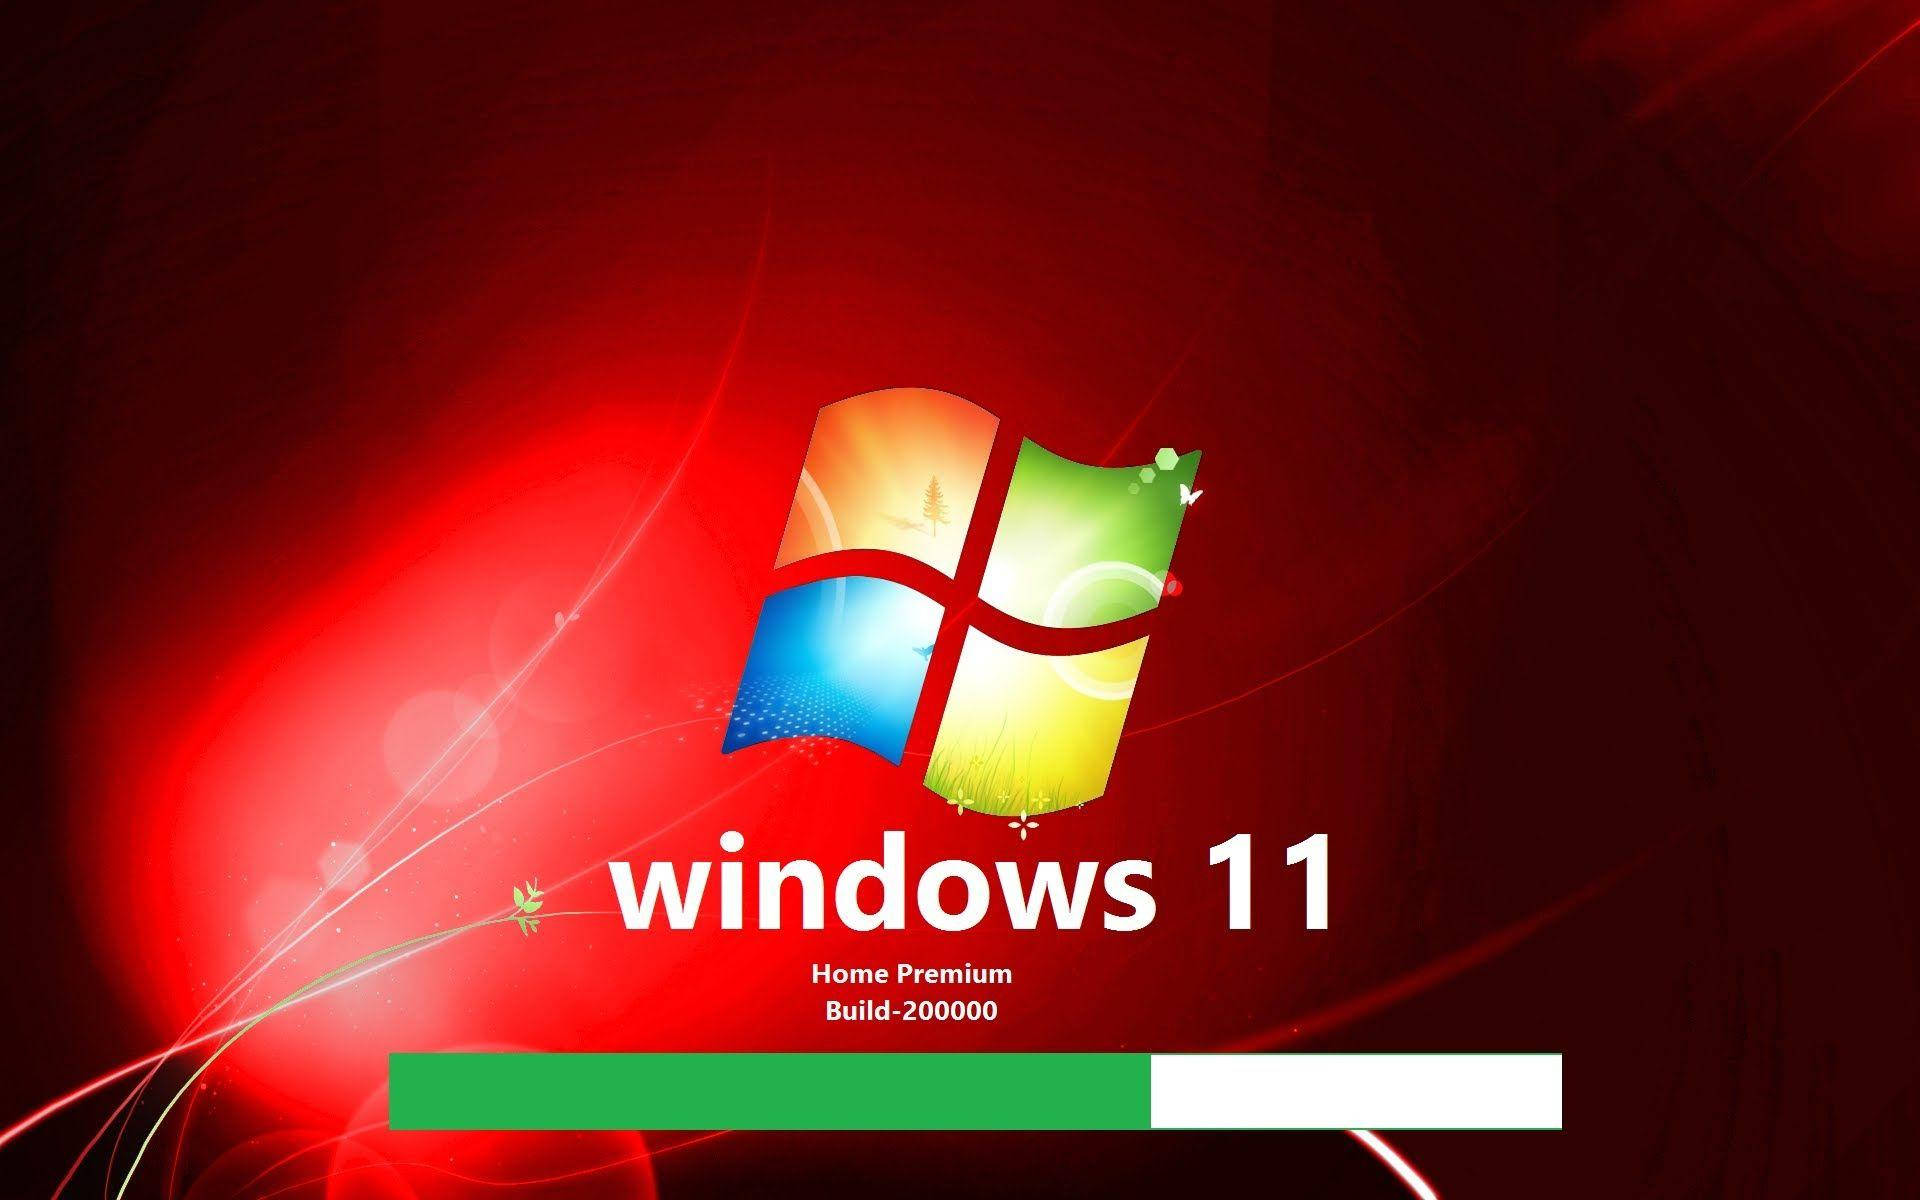 Windows 11 Home Premium Background